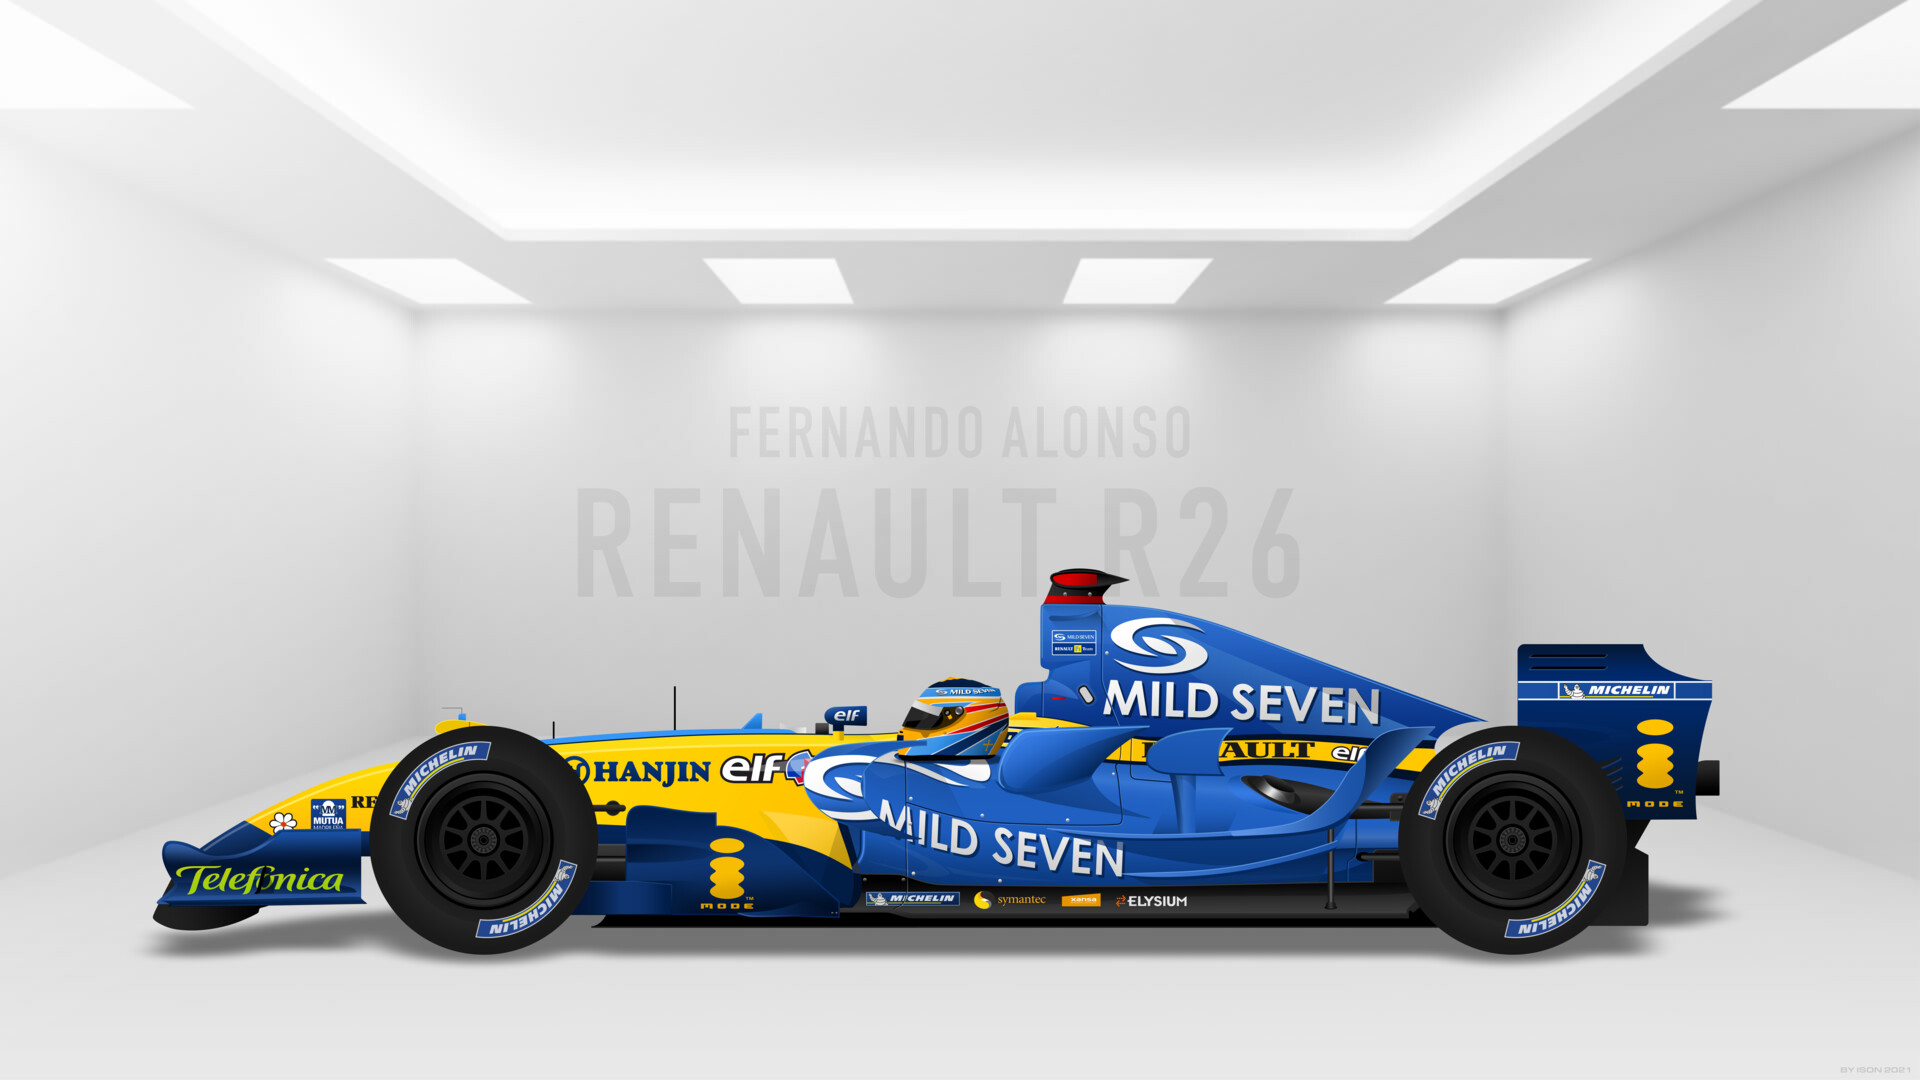 Renault R26 Wallpapers